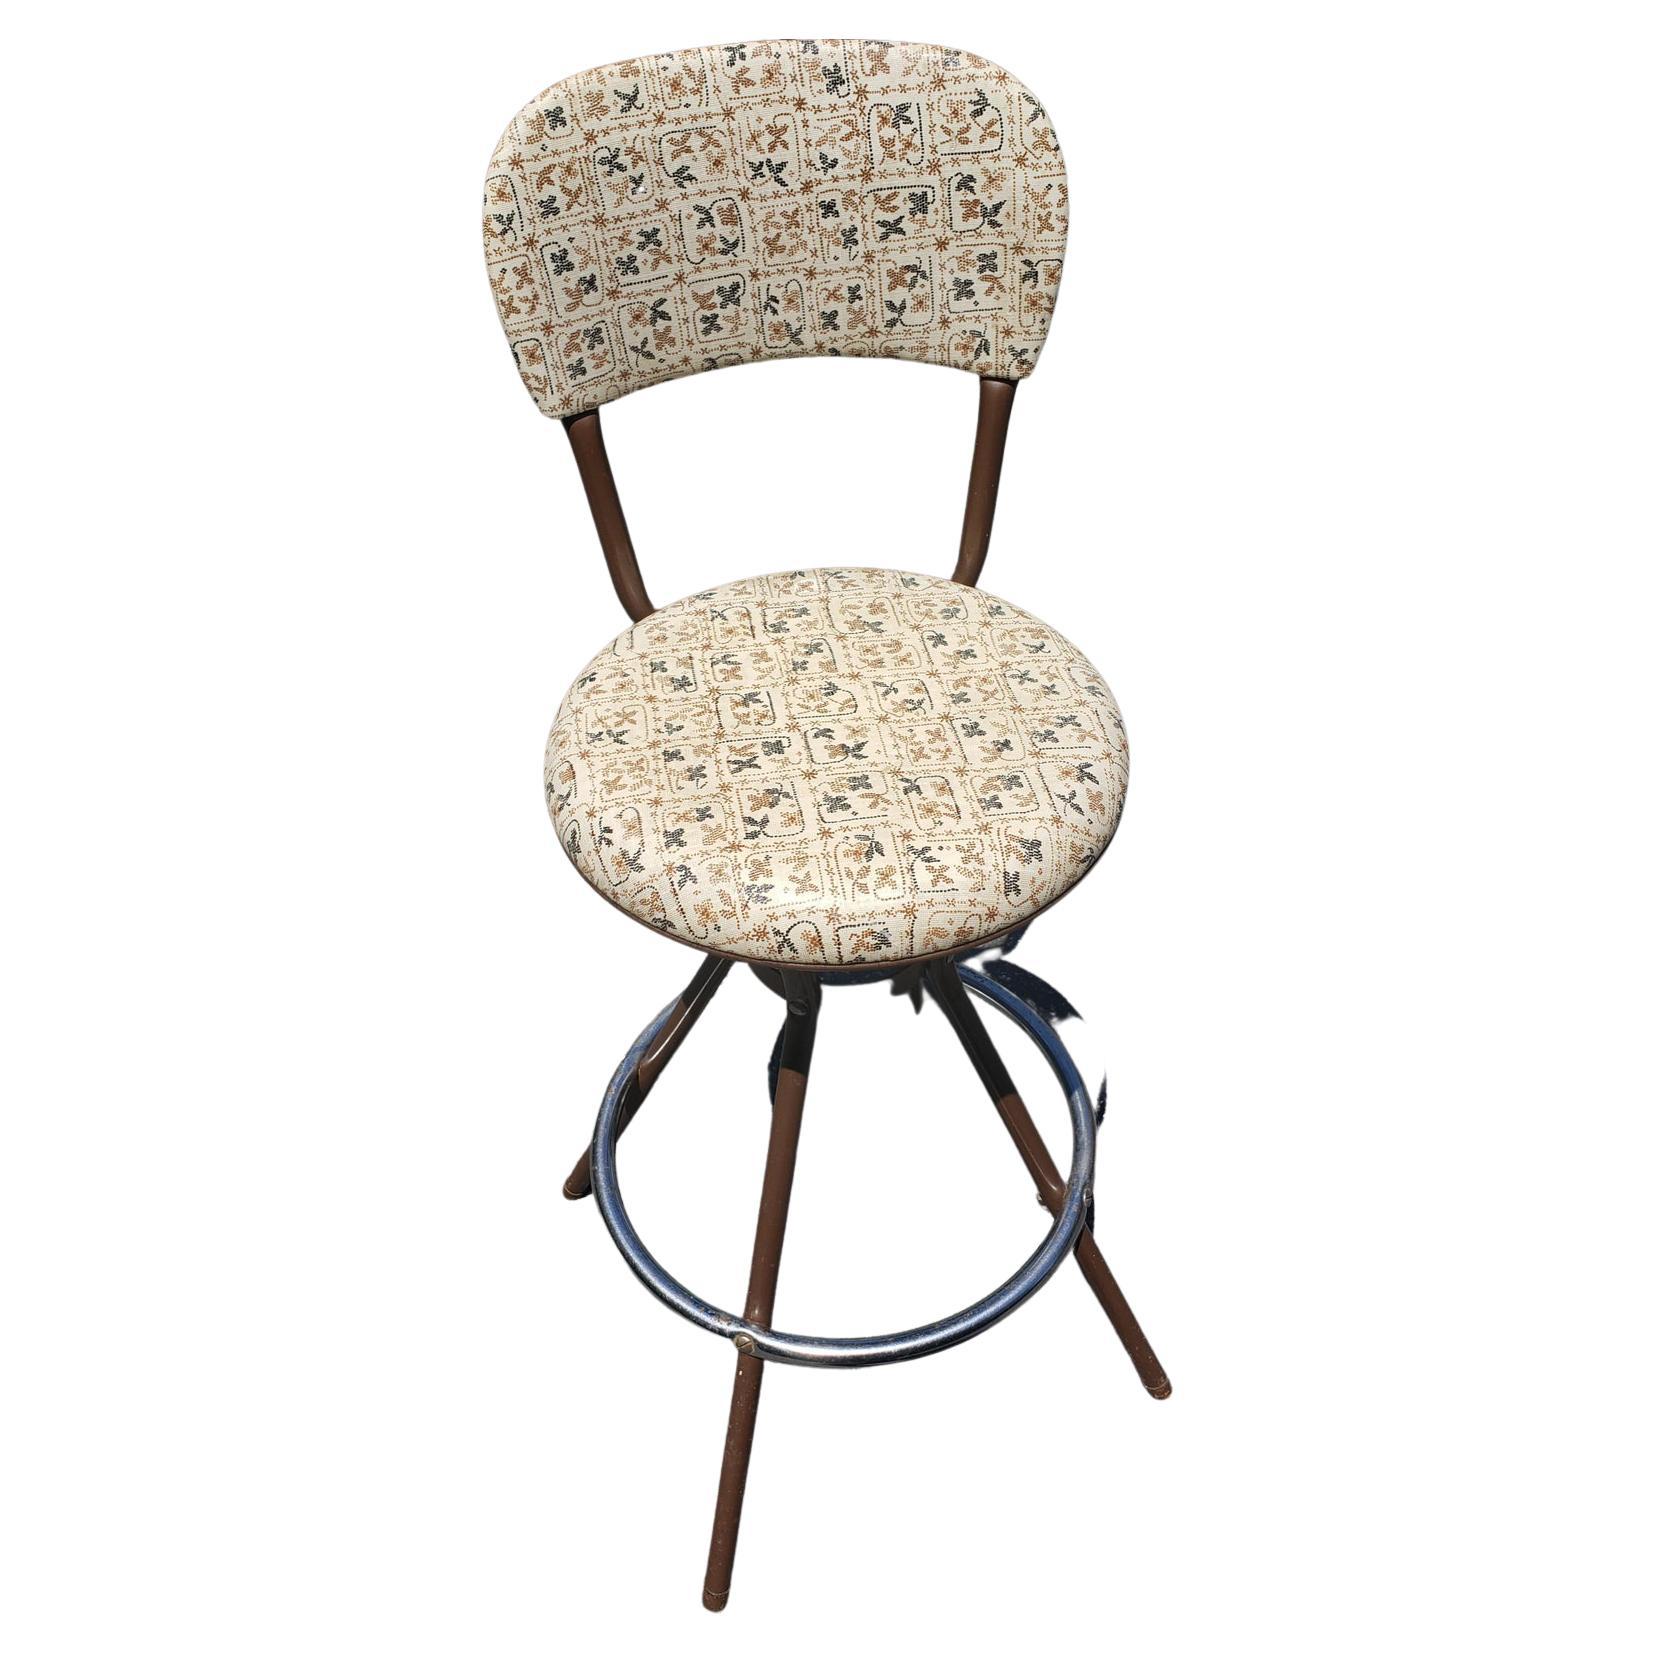 1950s cosco step stool chair